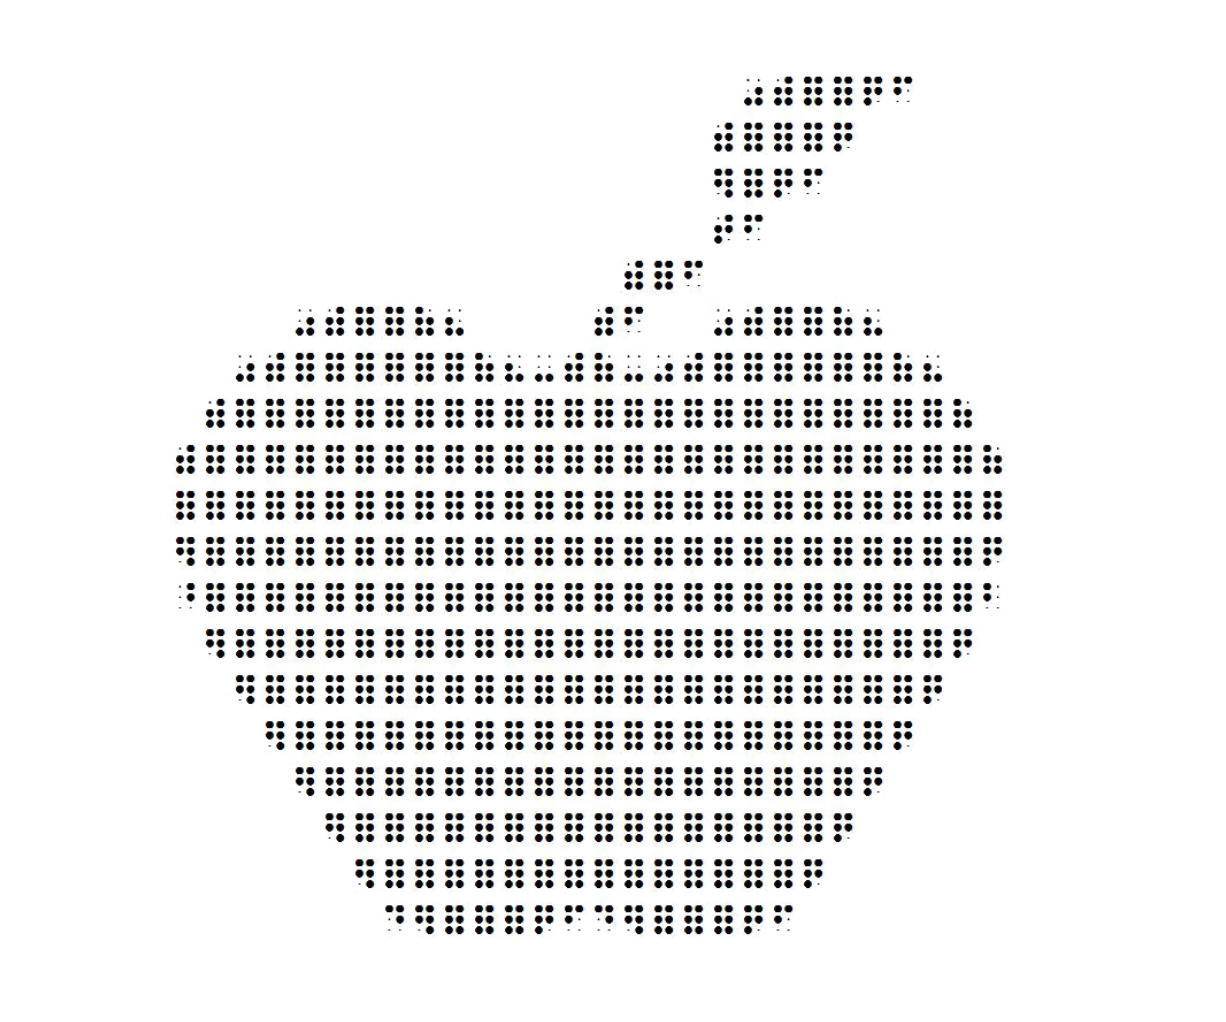 Braille design of apple